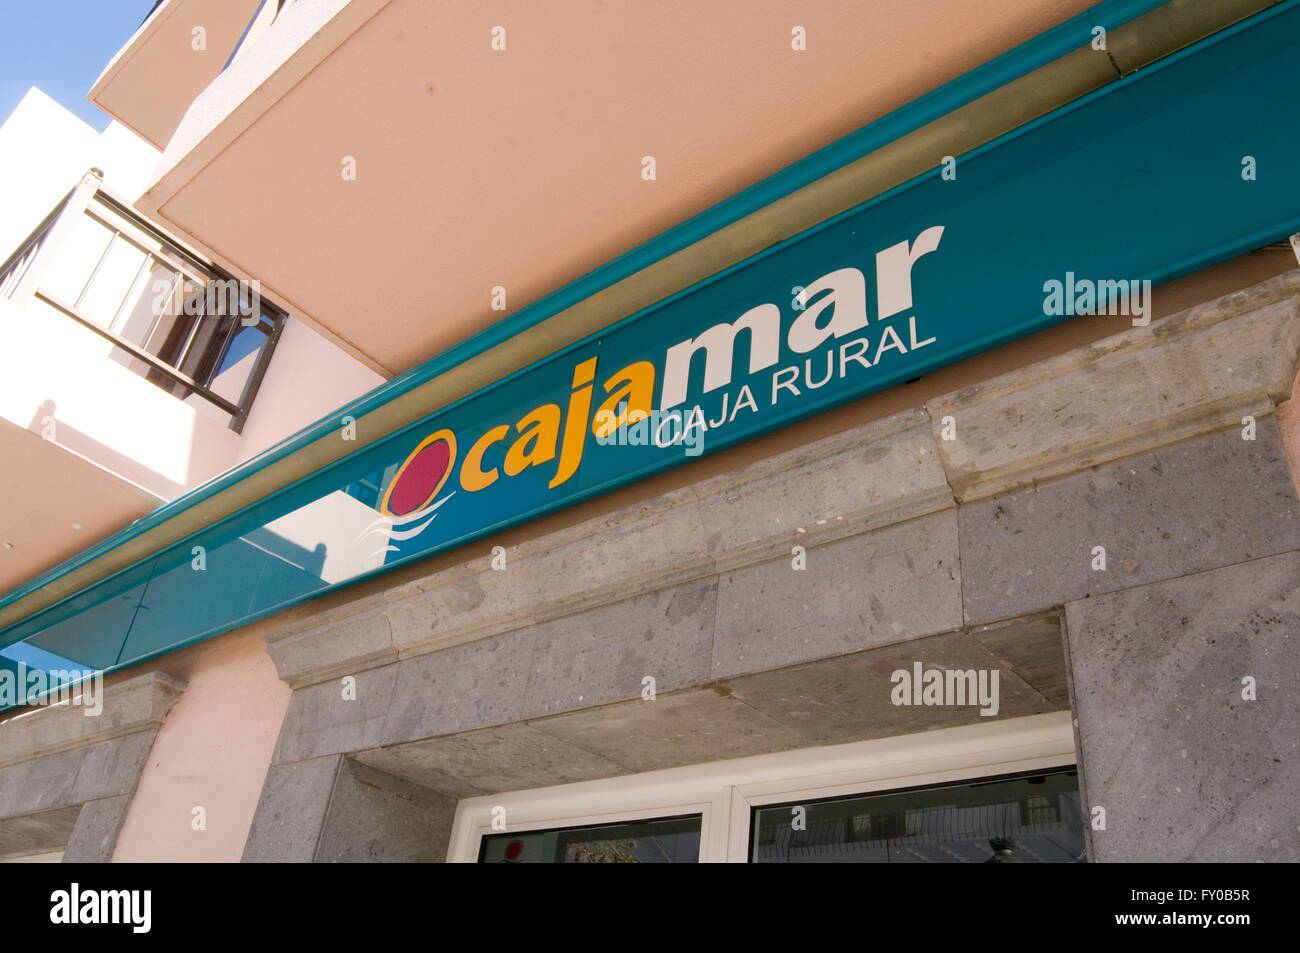 Cajamar Caja Rural mar banco bancos sucursal bancaria ramas ahorros españa  Fotografía de stock - Alamy